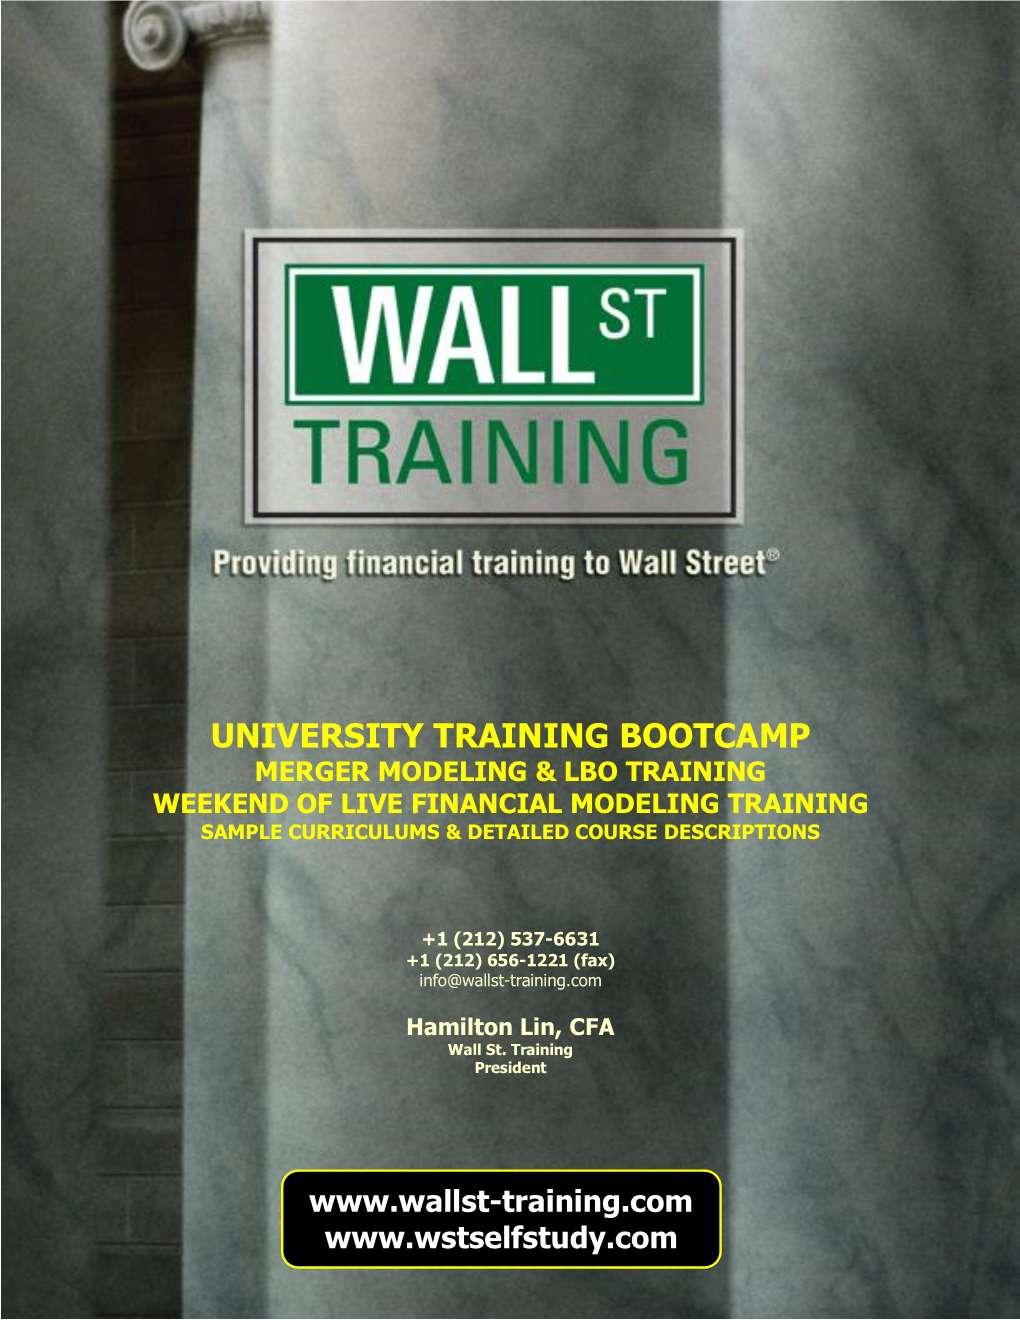 University Training Bootcamp Merger Modeling & Lbo Training Weekend of Live Financial Modeling Training